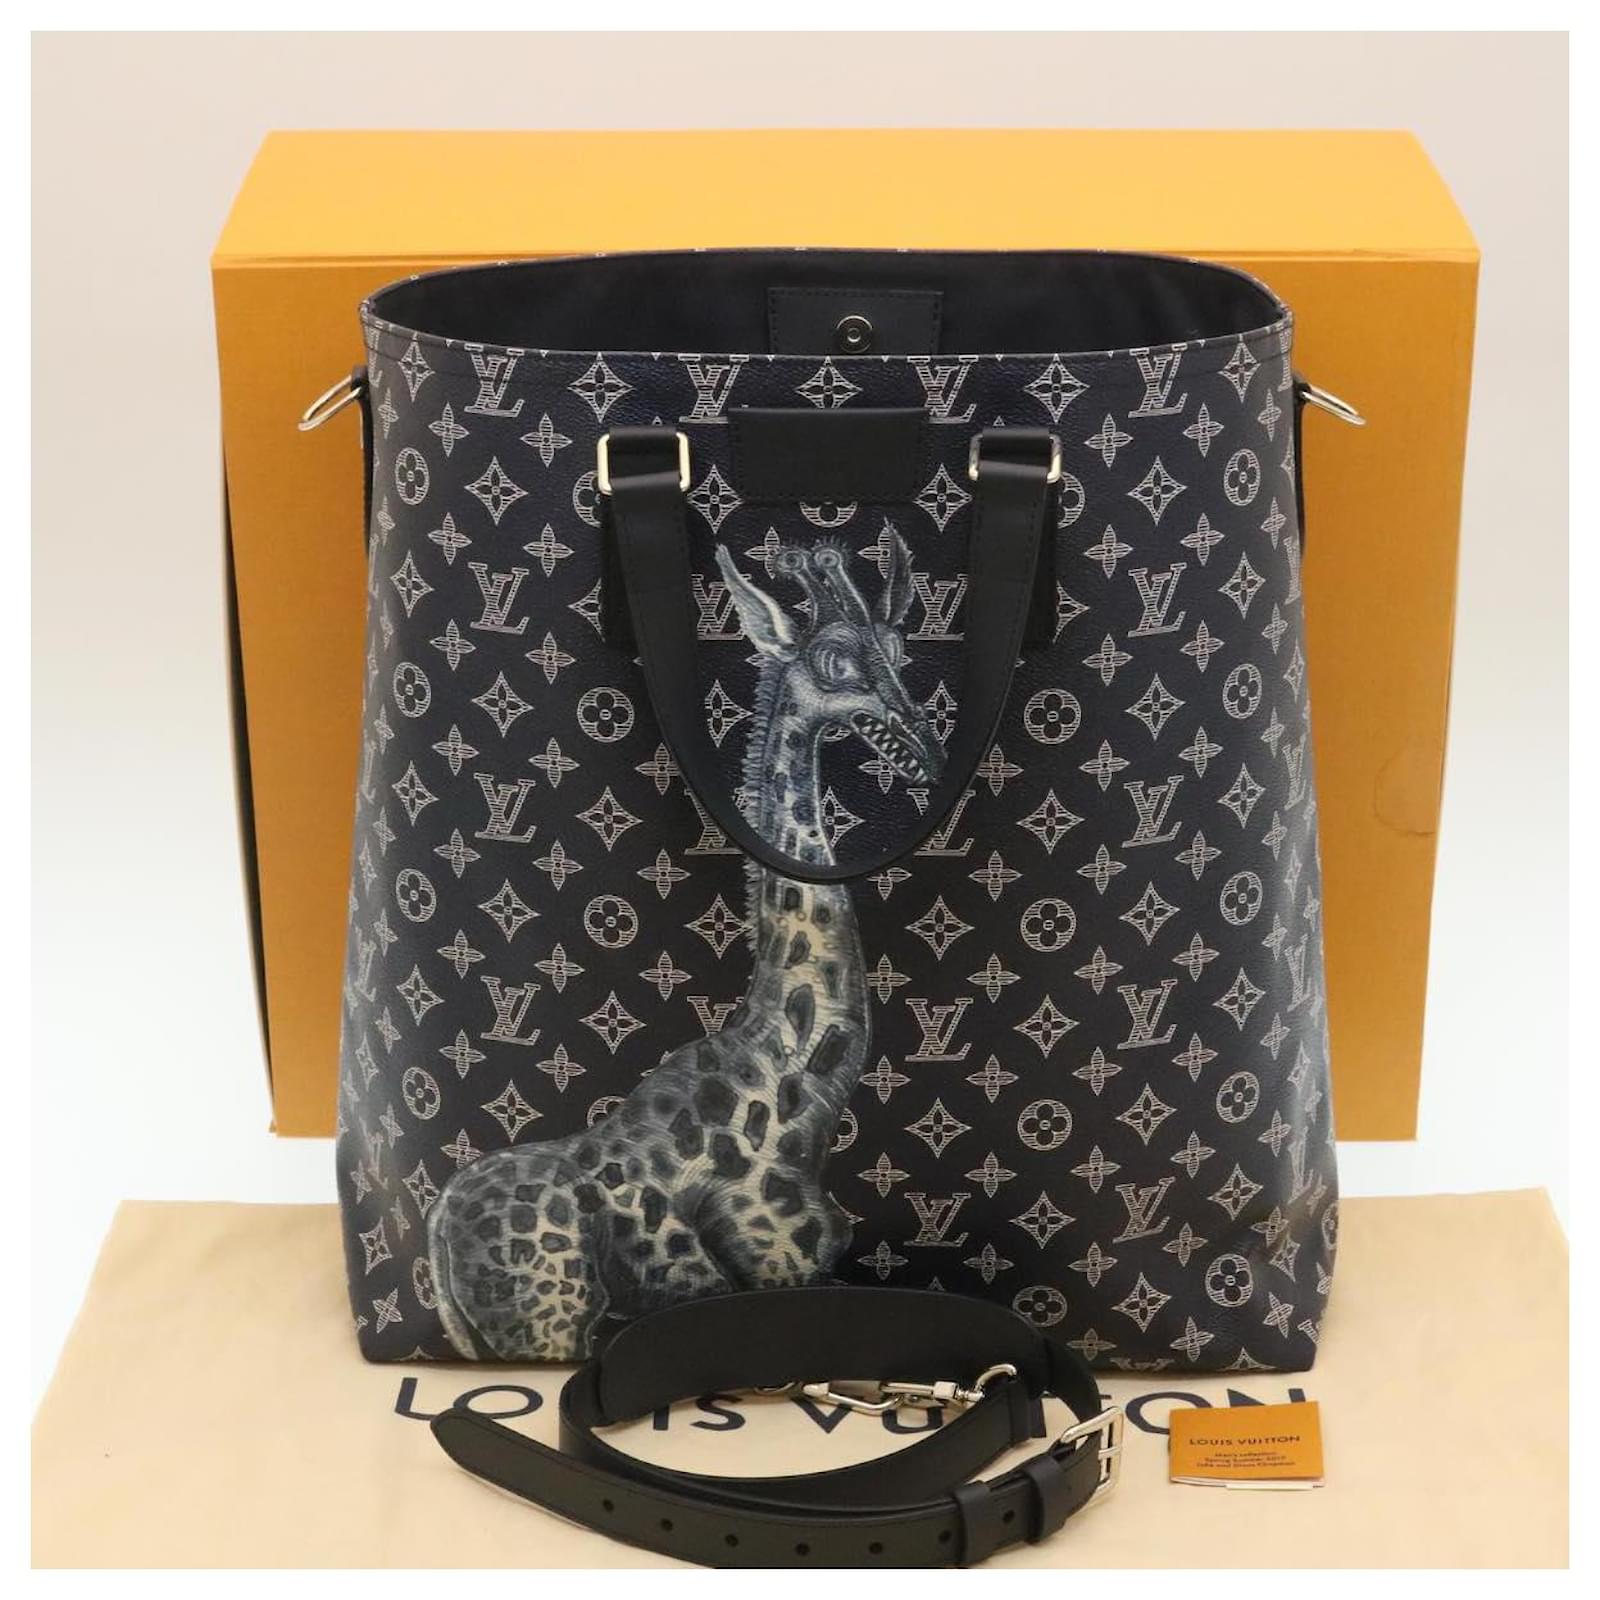 Sell Louis Vuitton Giraffe Navy Tote Bag - Navy Blue